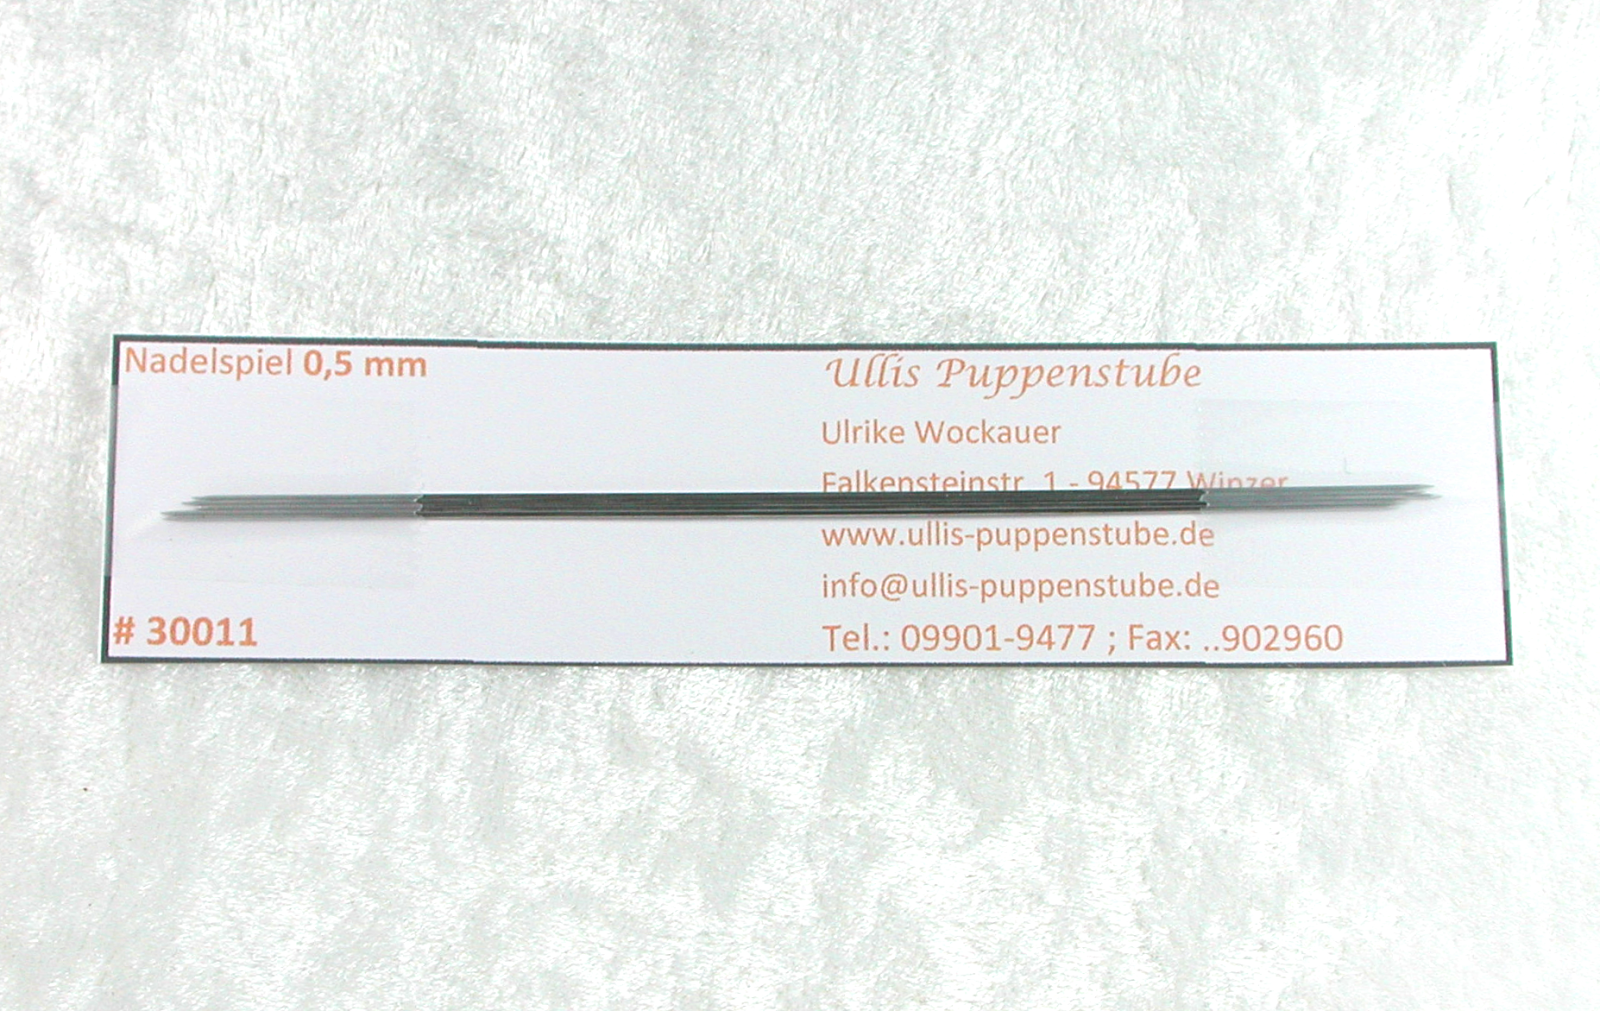 Stricknadelspiel in 05 mm 06 mm 08 mm 1mm Länge 12 cm Mini Strickzubehör Dünne Stricknadel